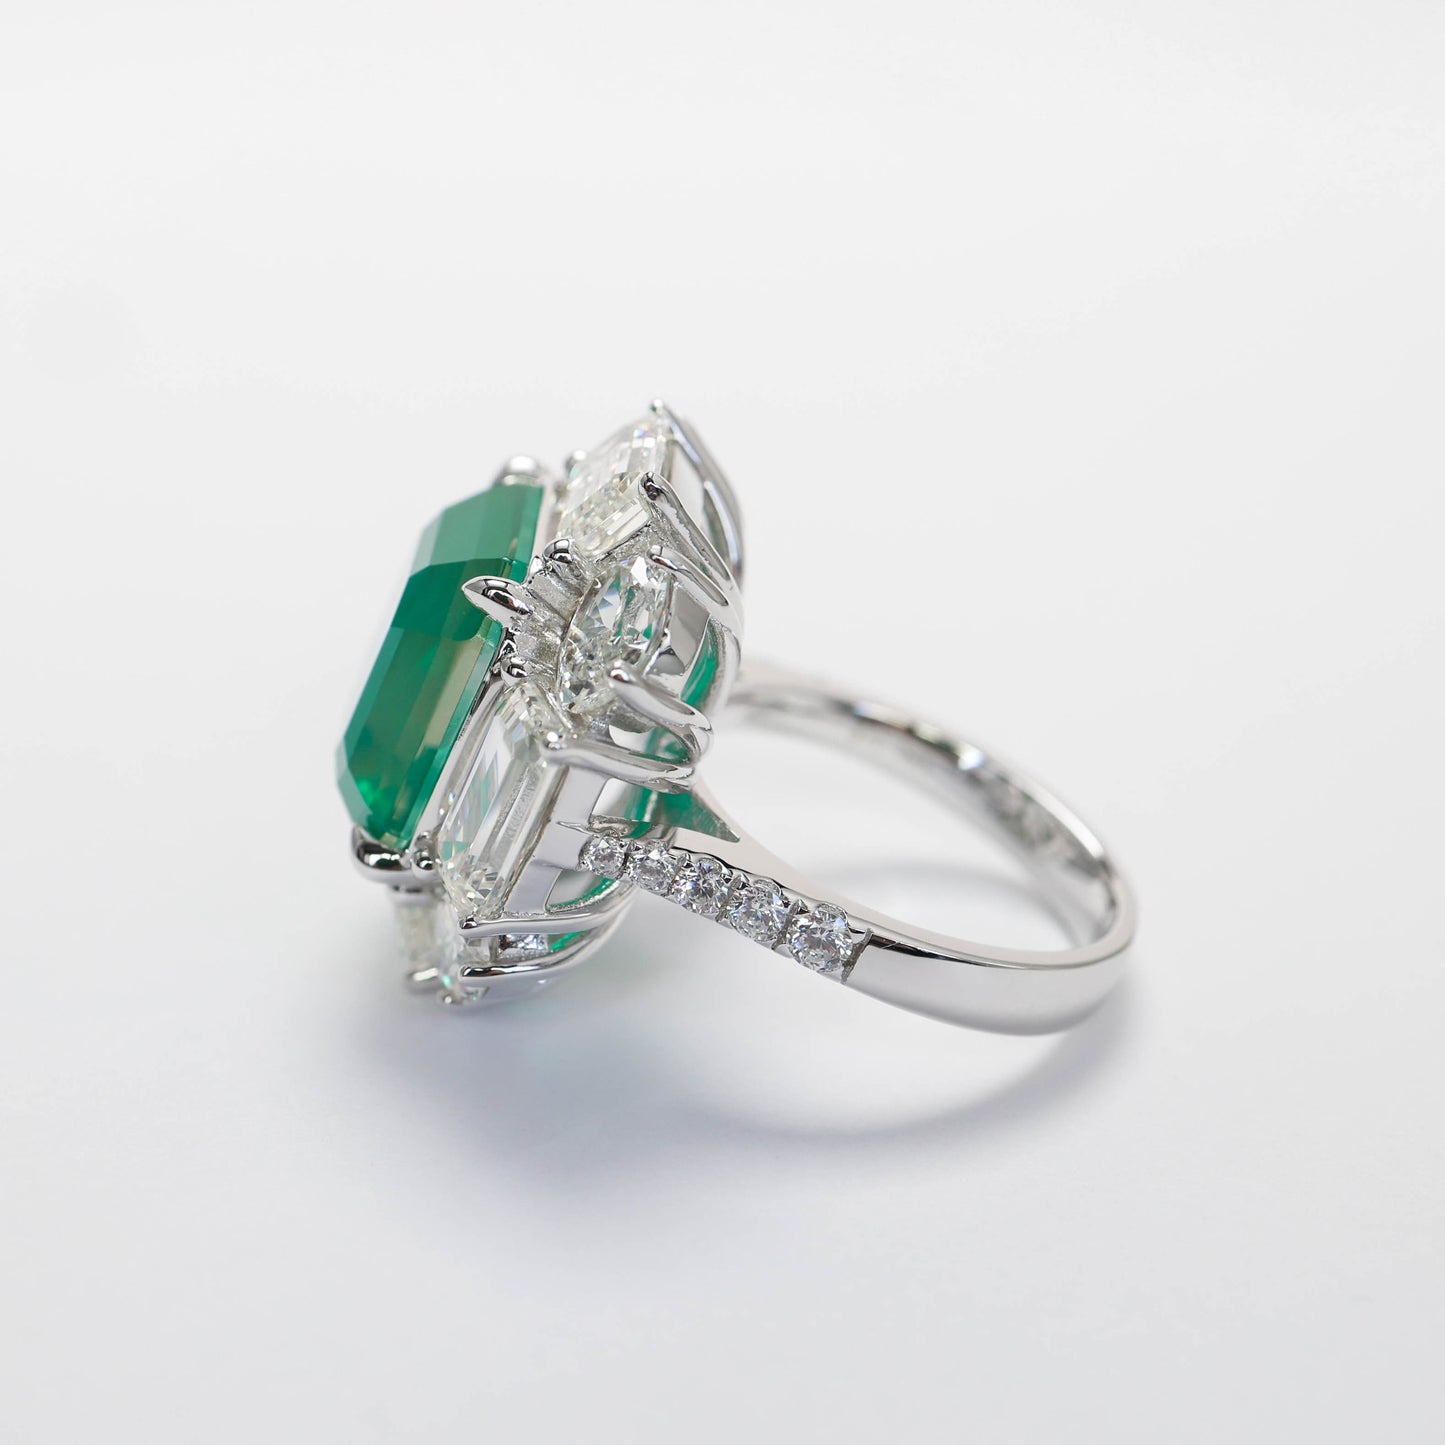 Micro-setting Emerald color Lab created stones big Square retro ring, sterling silver